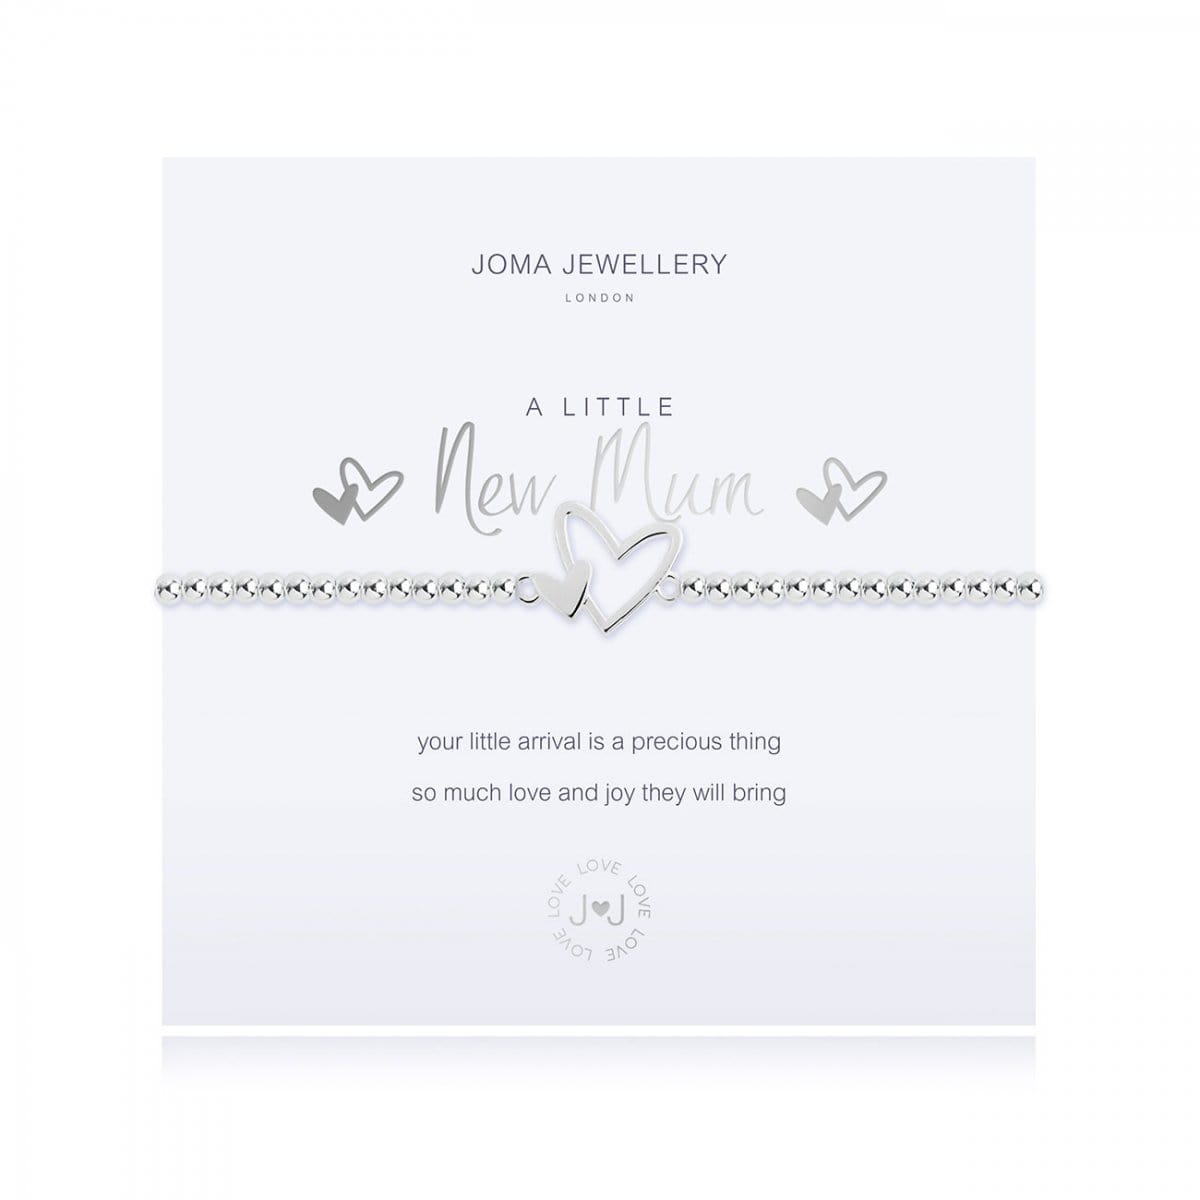 A little new mum silver bracelet by Joma Jewellery